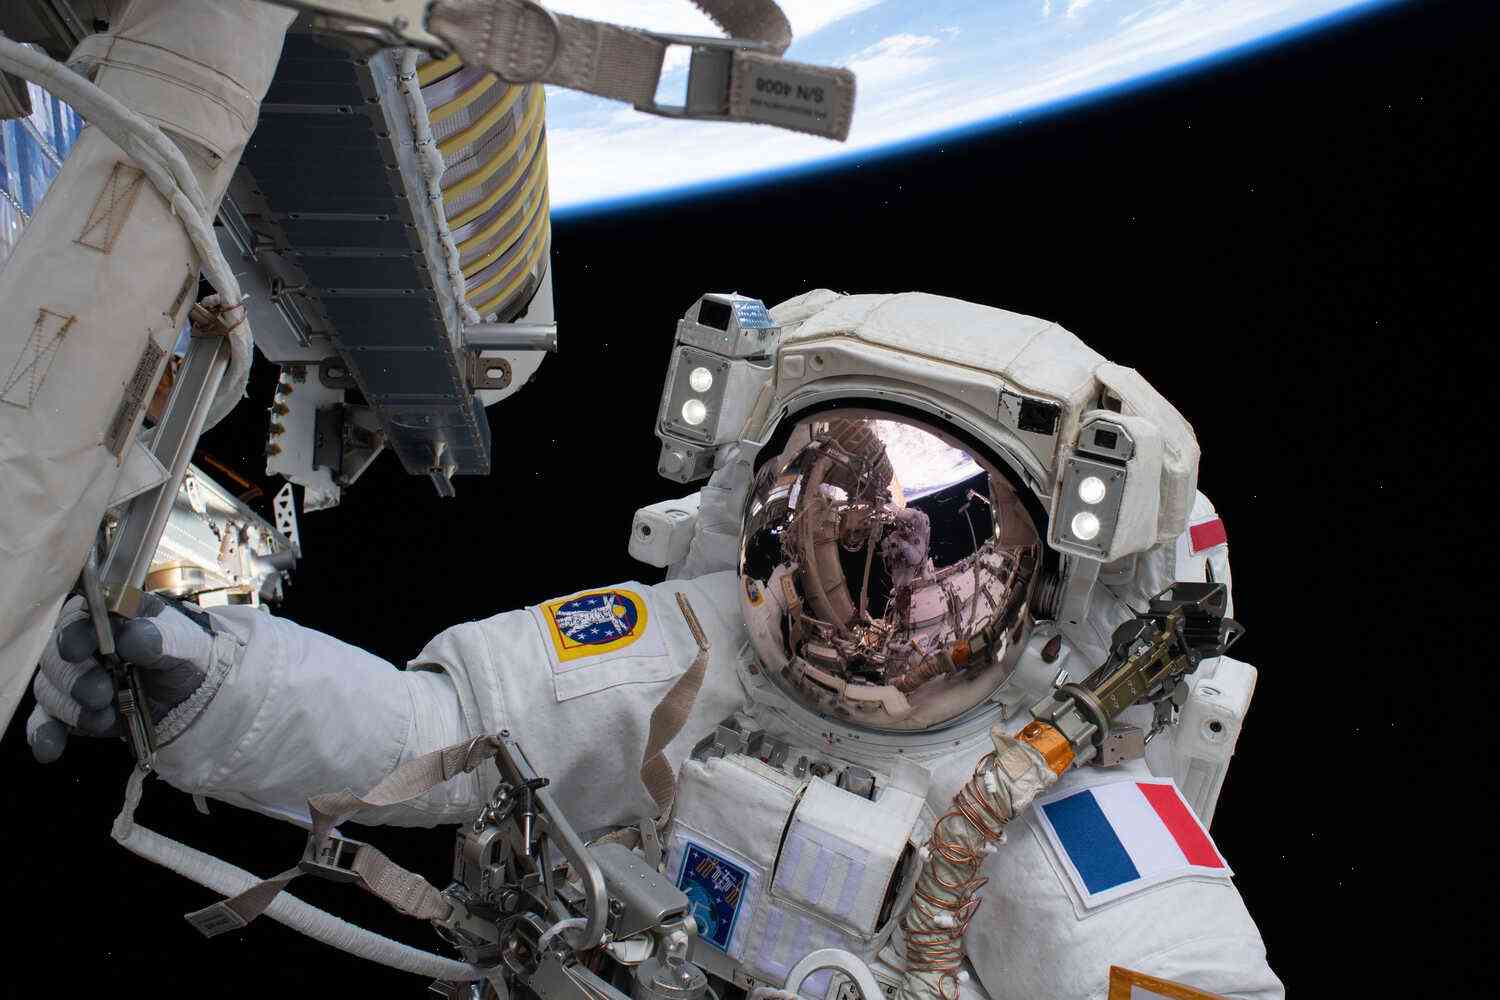 NASA postpones Friday spacewalk after ‘potential debris’ found on space station